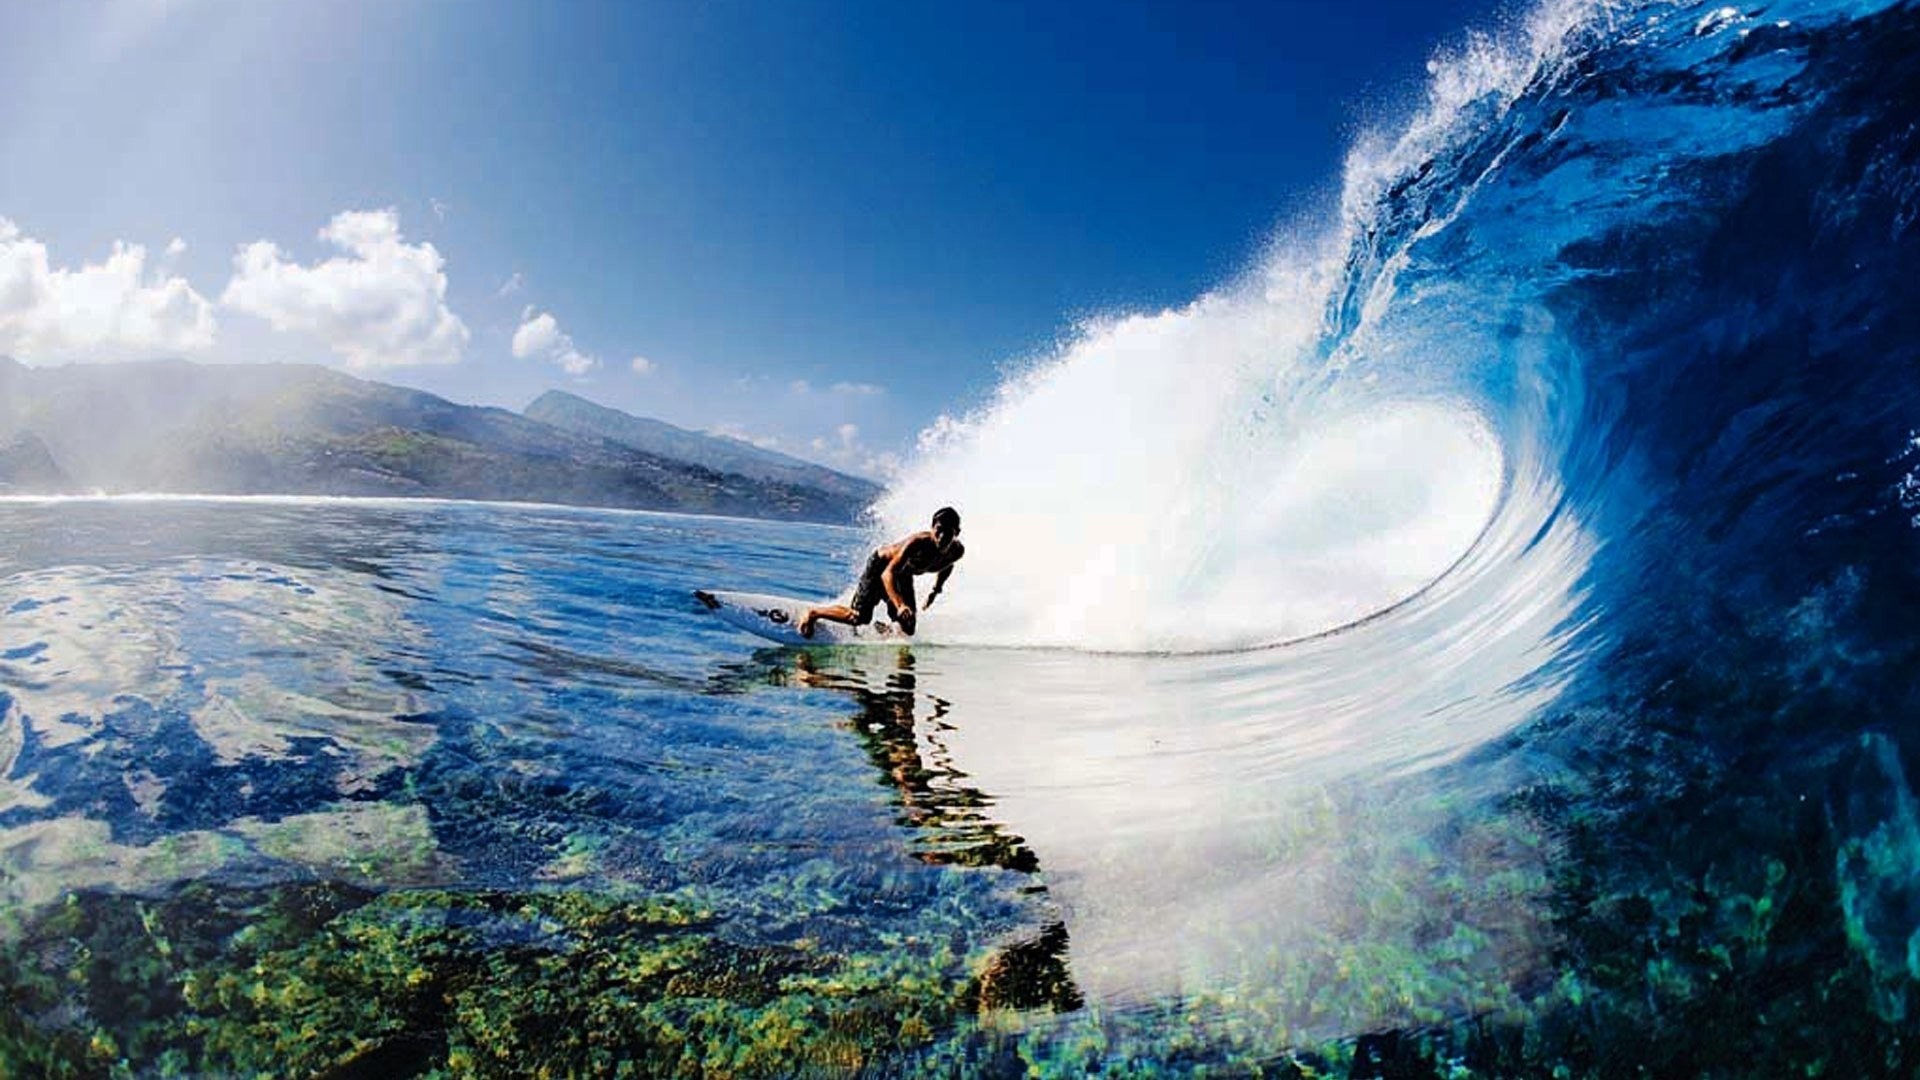 HD Wallpaper Background ID431411. Sports Surfing